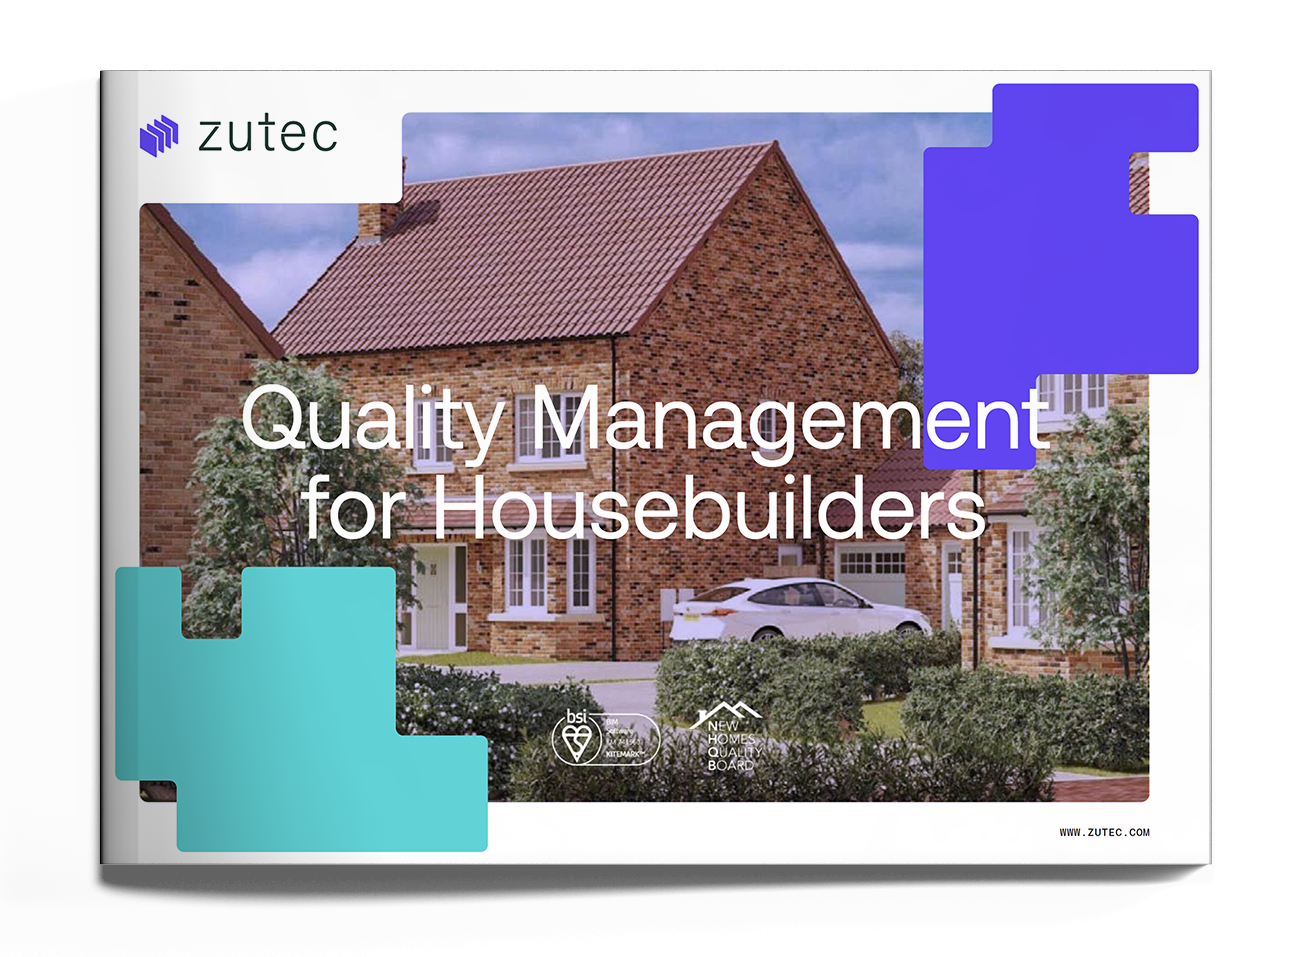 Zutec Quality Management Booklet Mockup Cover